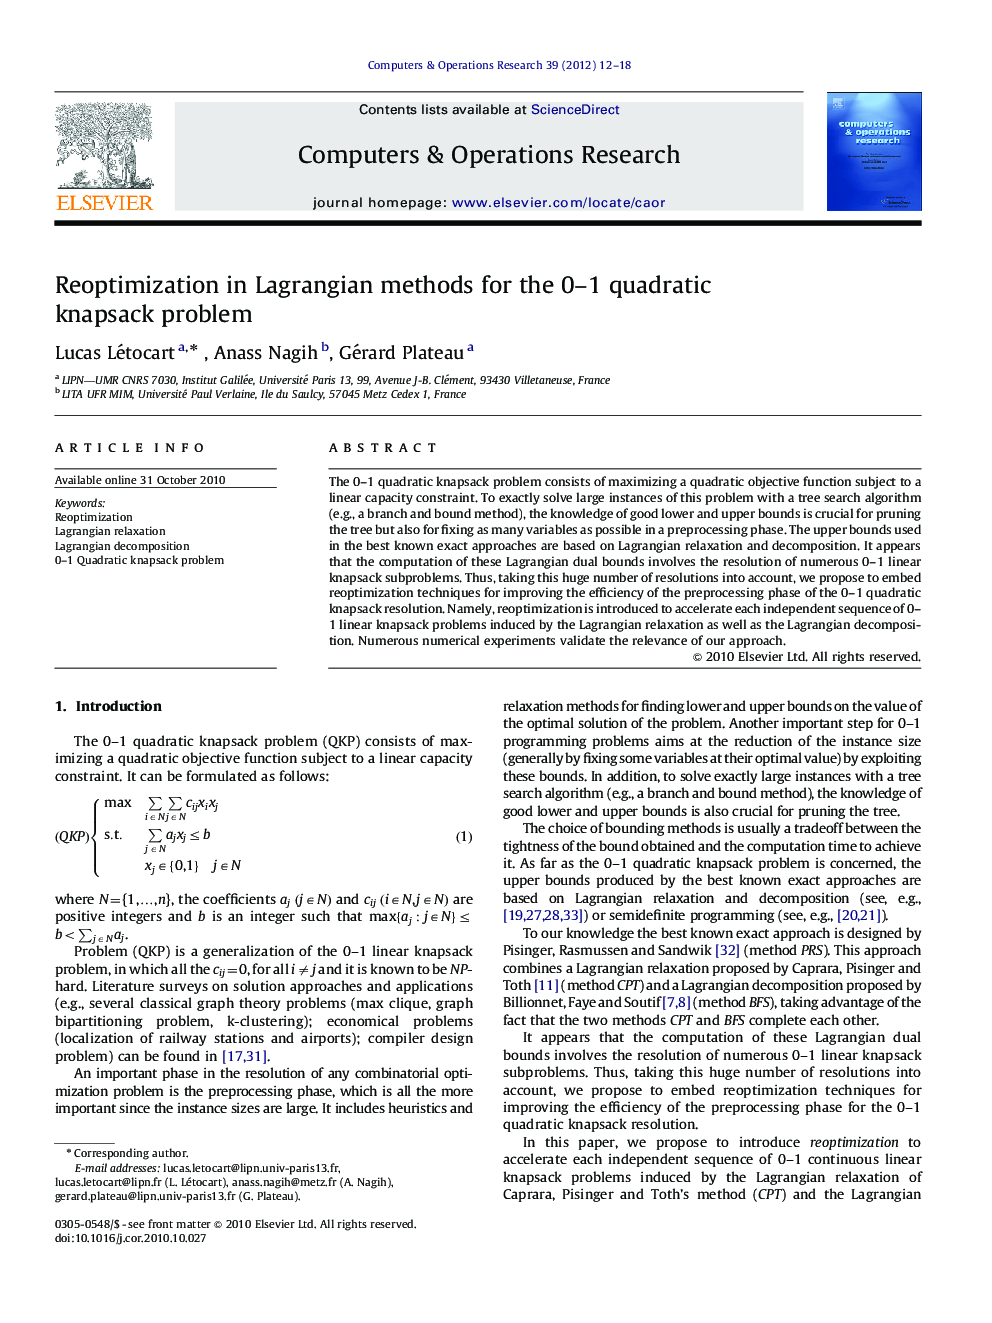 Reoptimization in Lagrangian methods for the 0–1 quadratic knapsack problem